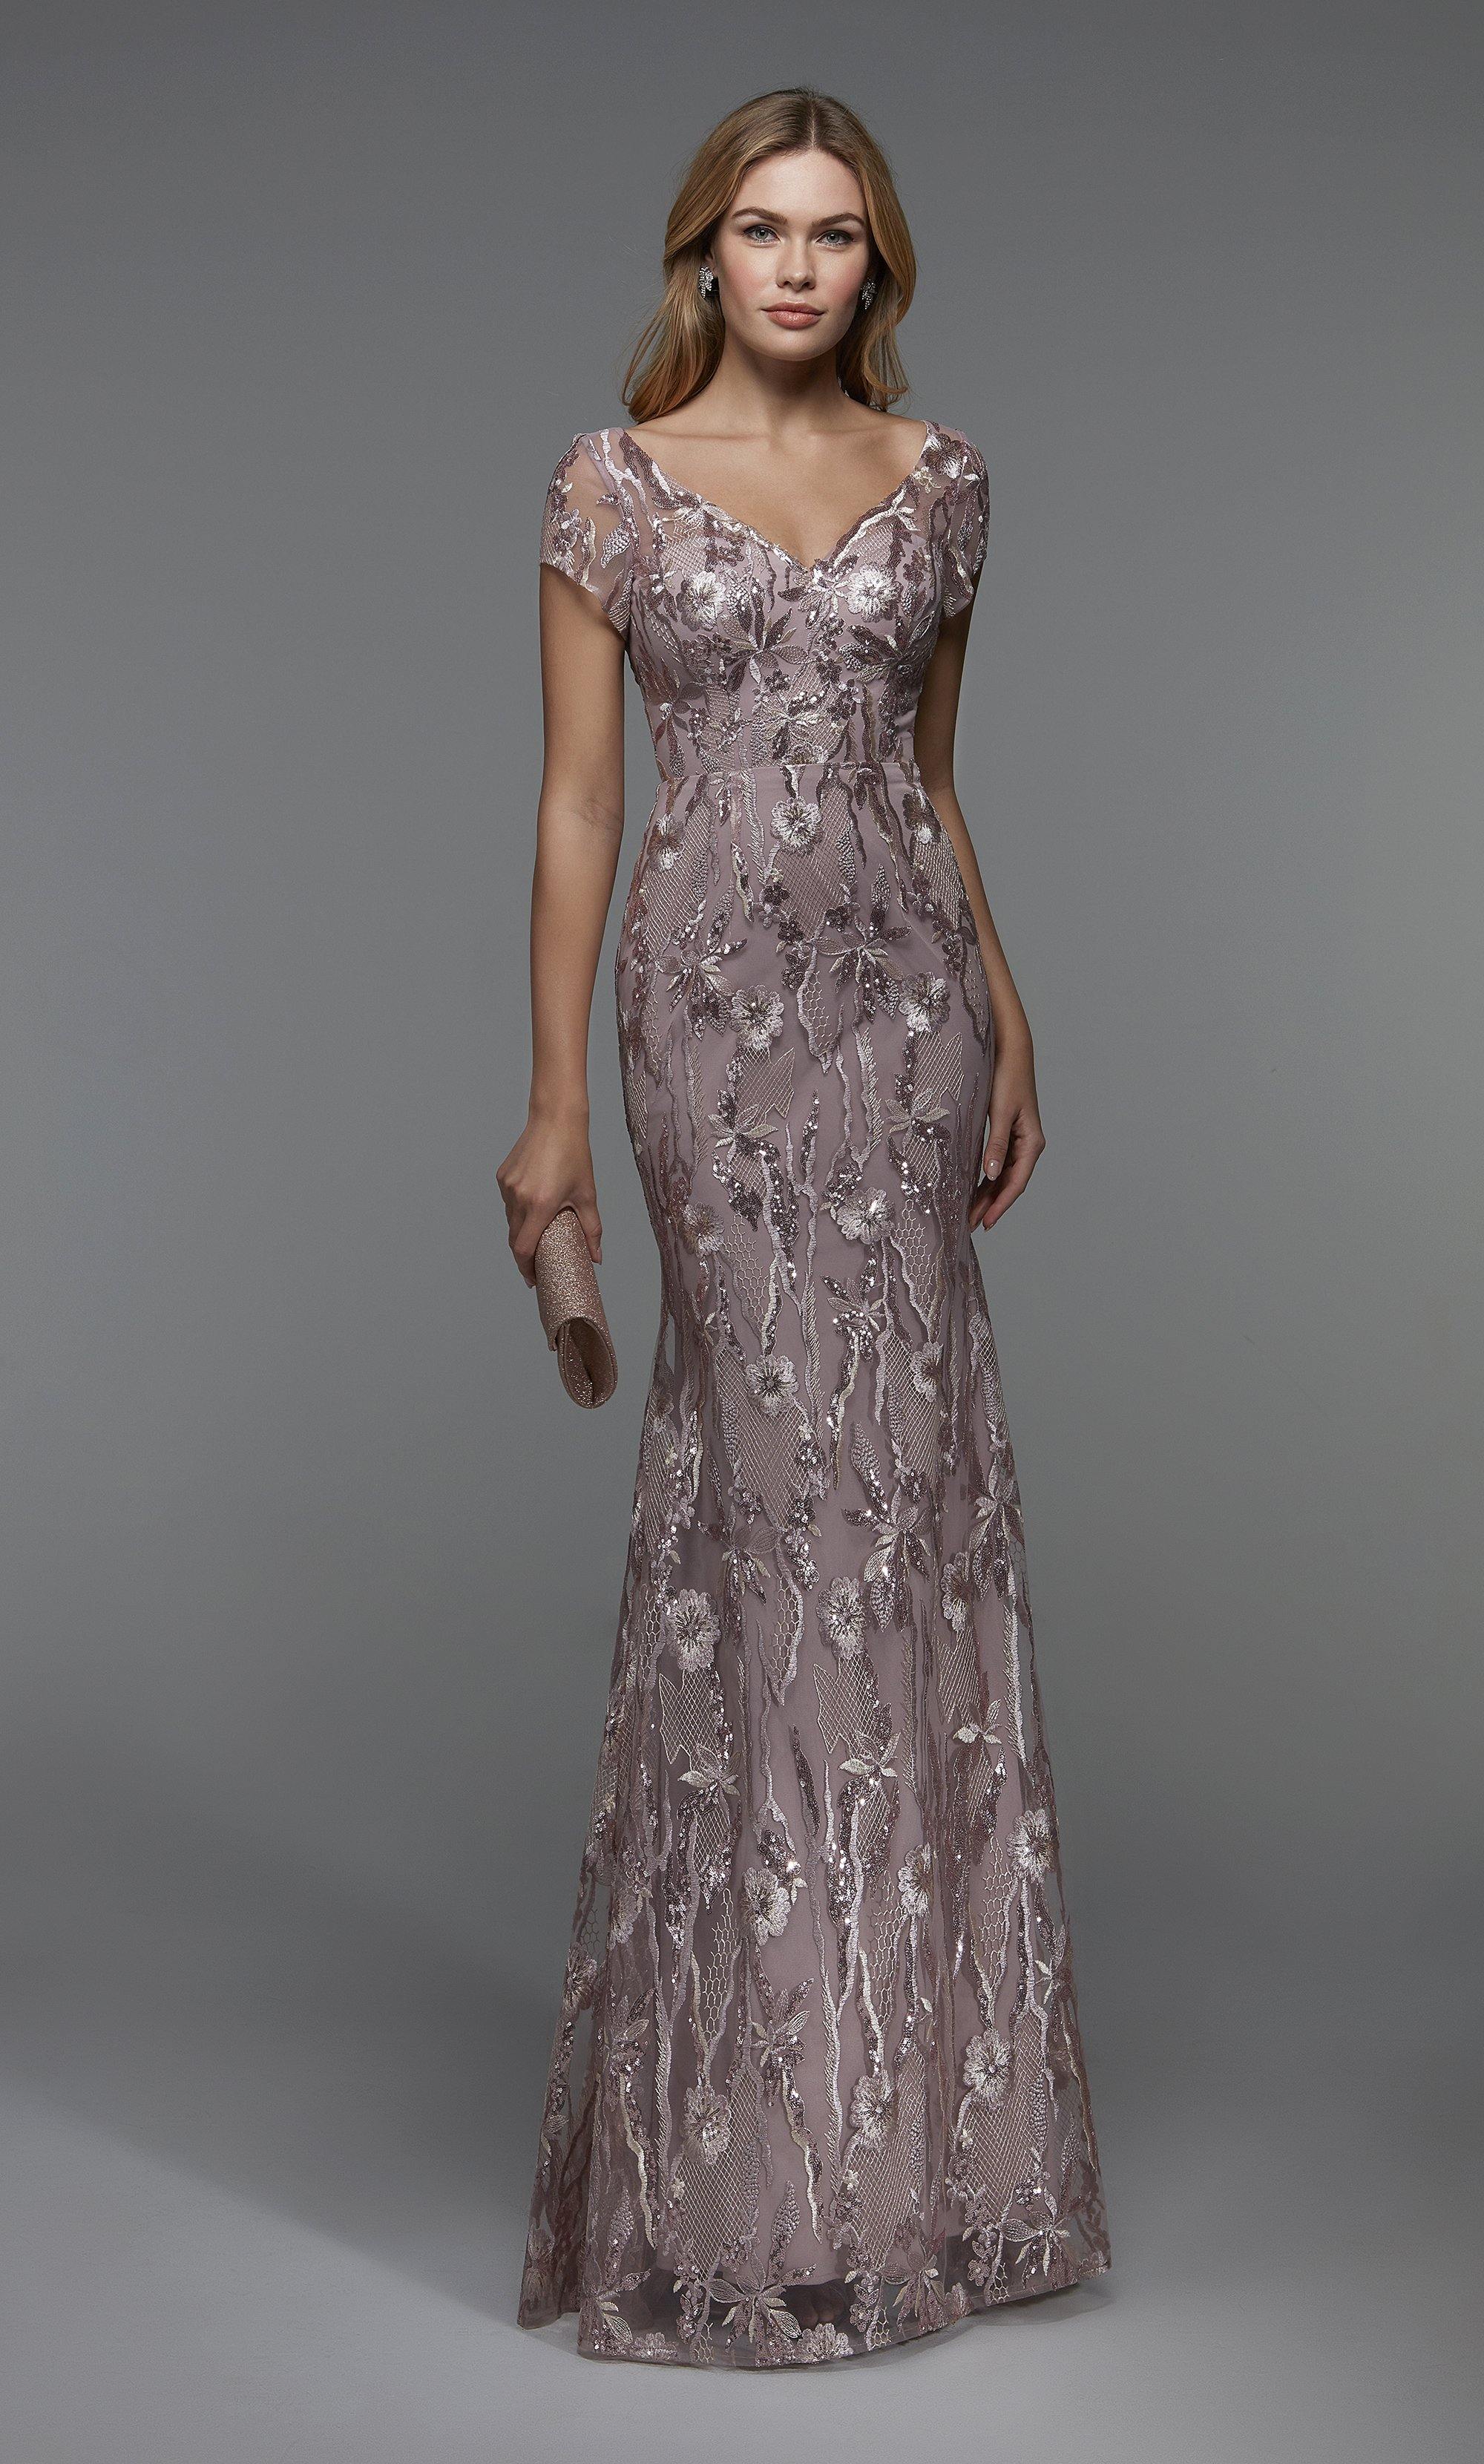 Formal Dress: 27533. Long Pretty Dresses, Illusion Neckline, Fit N Flare Alyce Paris